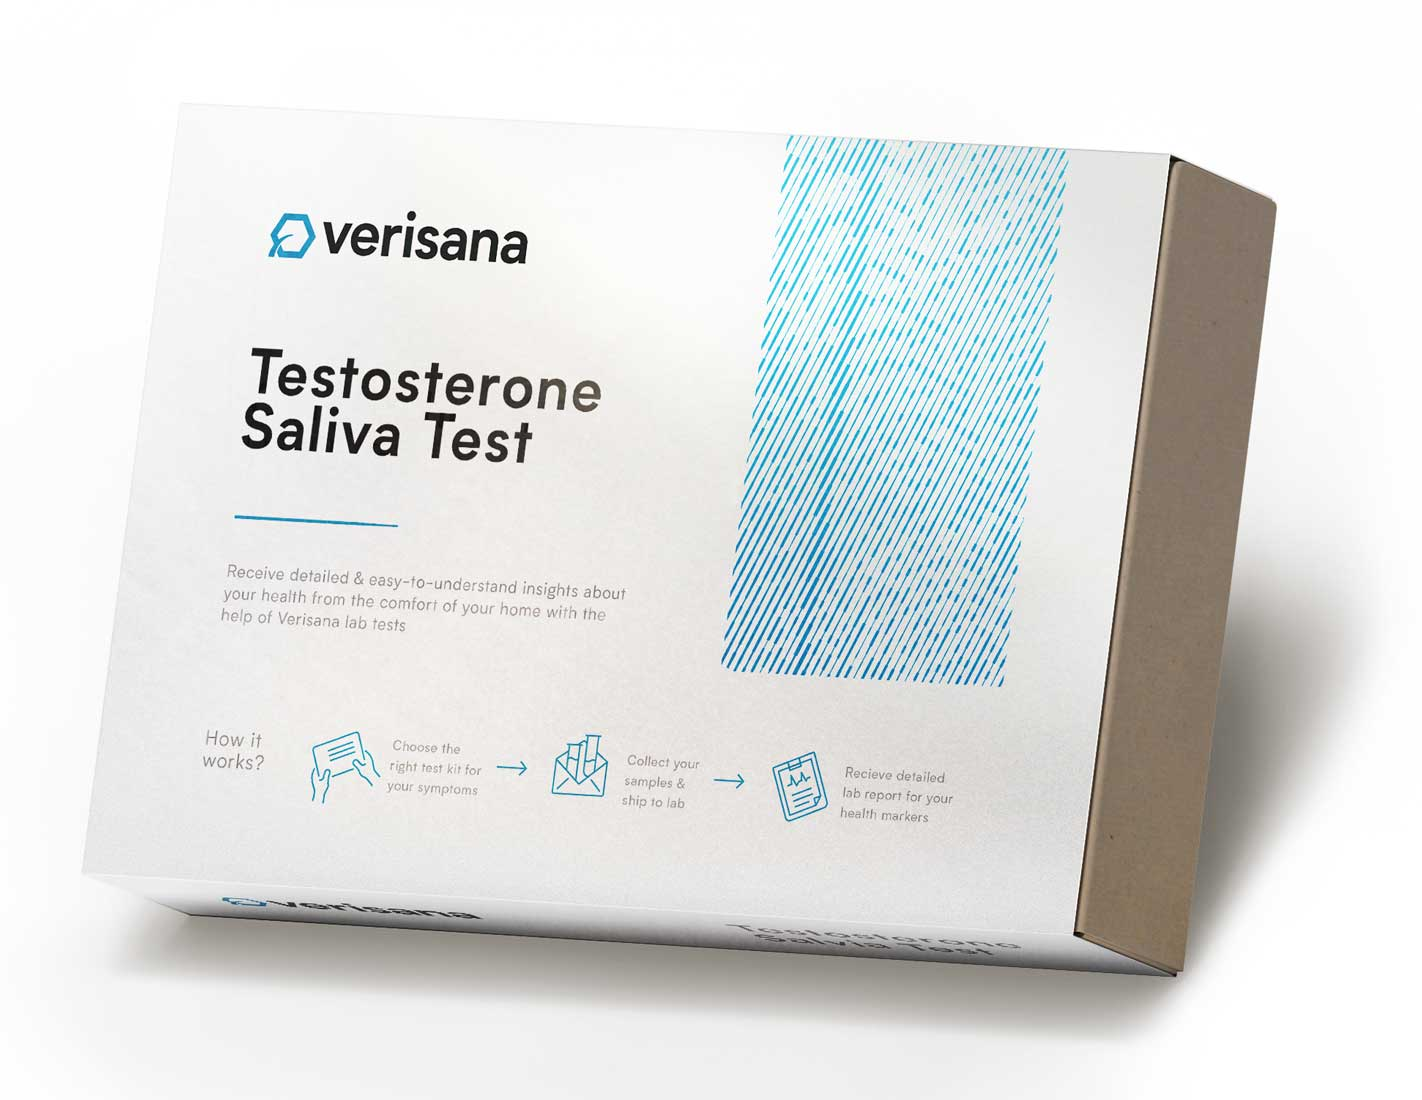 Verisana Testosterone test kits